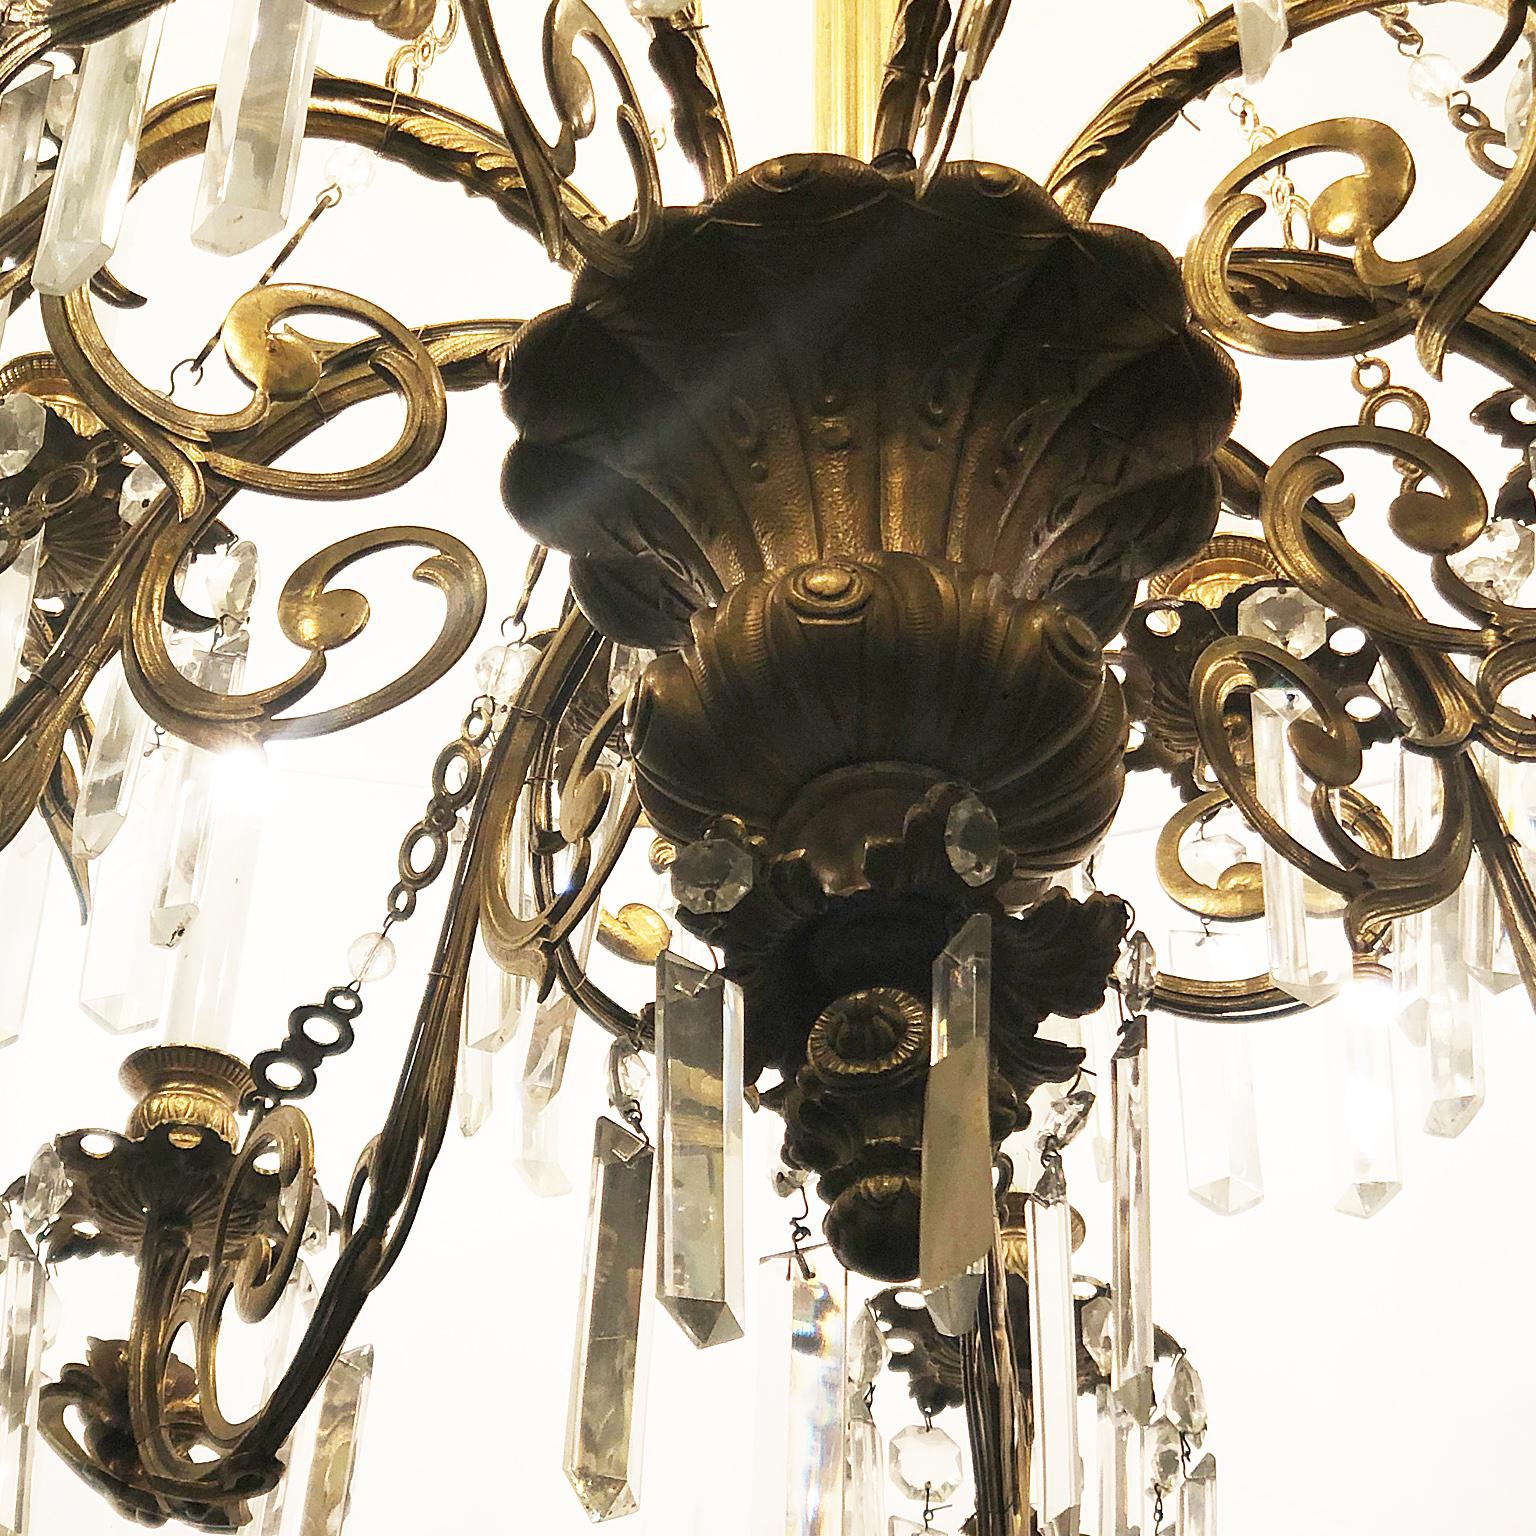 Empire Revival Italian Florence Capital Big Chandelier Gilded Bronze Cristall Pendent 16-Light For Sale